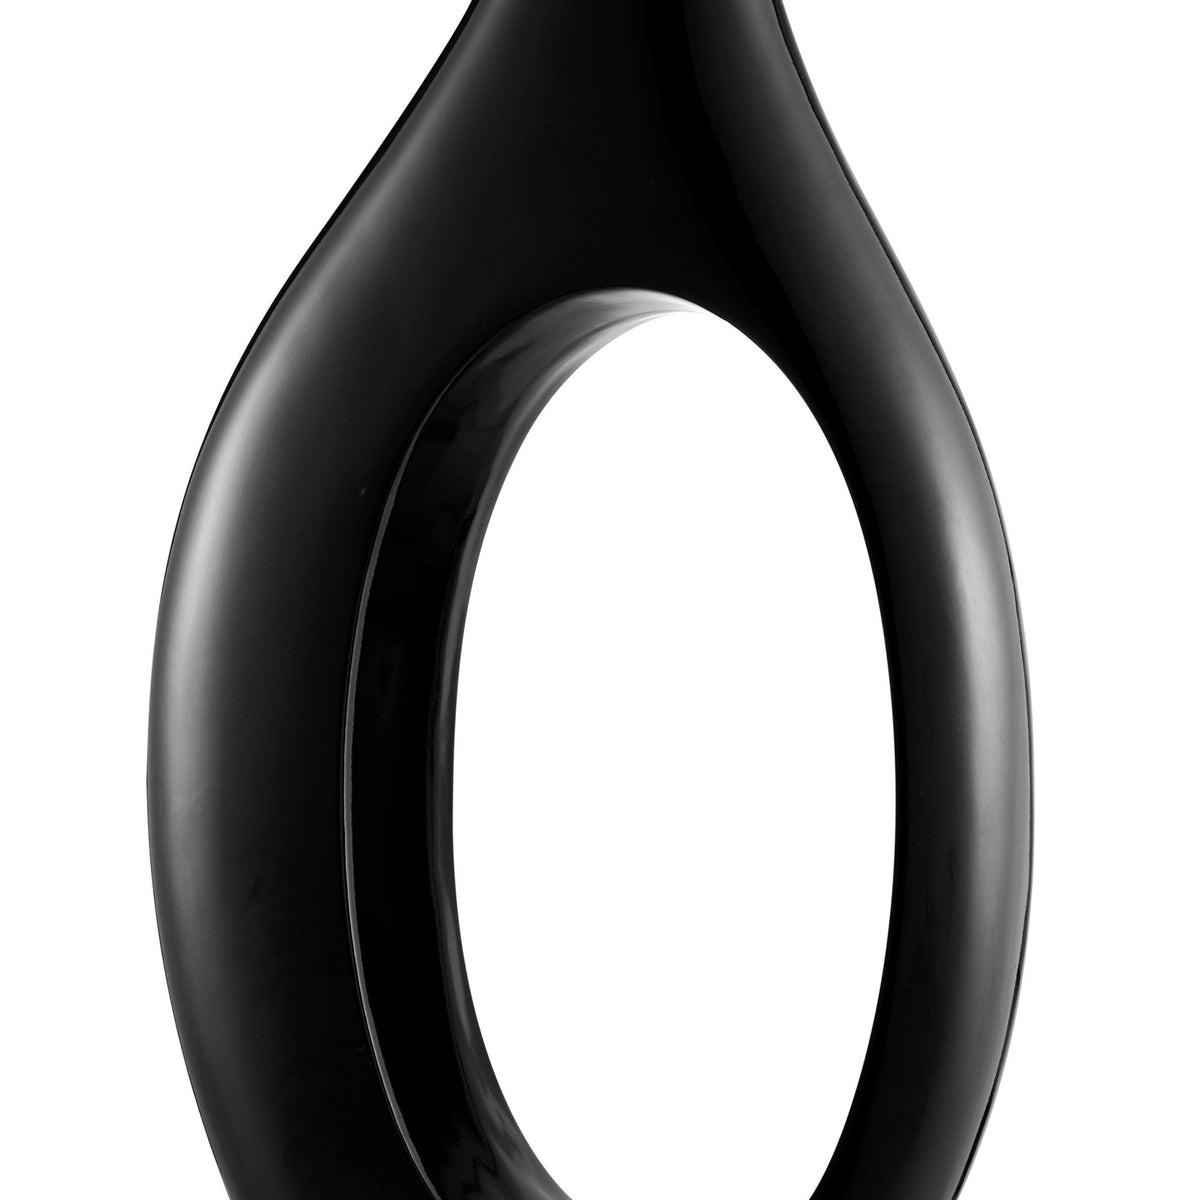 Trombone Modern Vase in Black / Small